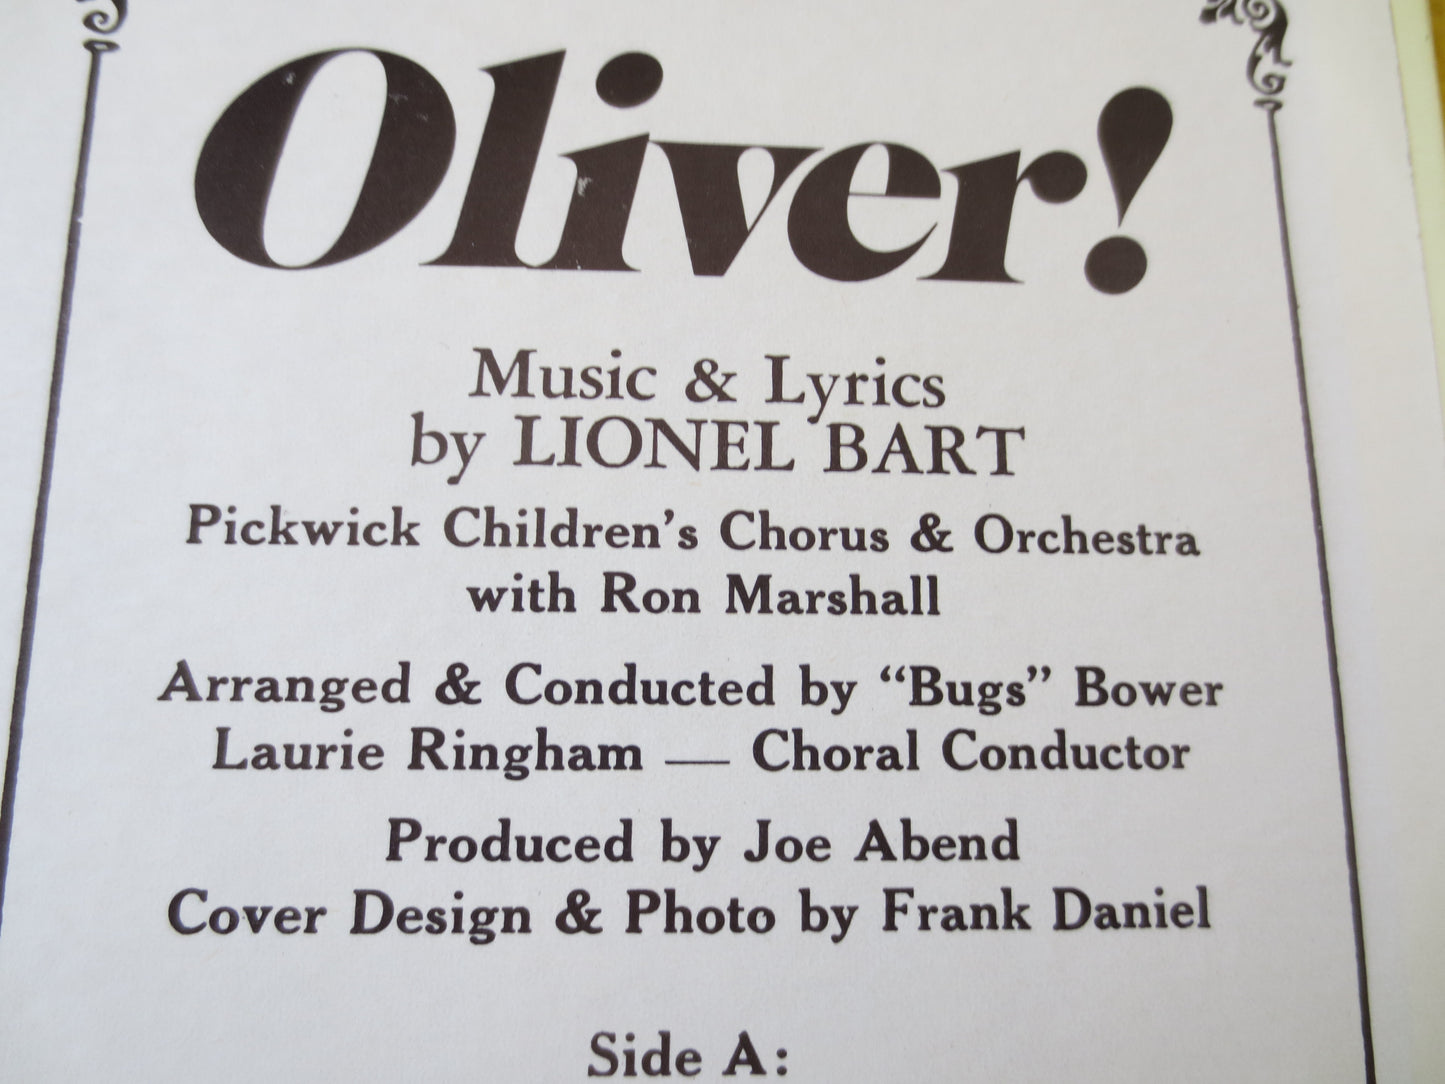 OLIVER, CHILDREN'S RECORDS, Pickwick Records, Childrens Record, Kids Record, Vintage Vinyl, Records, Vinyl, 1967 Records